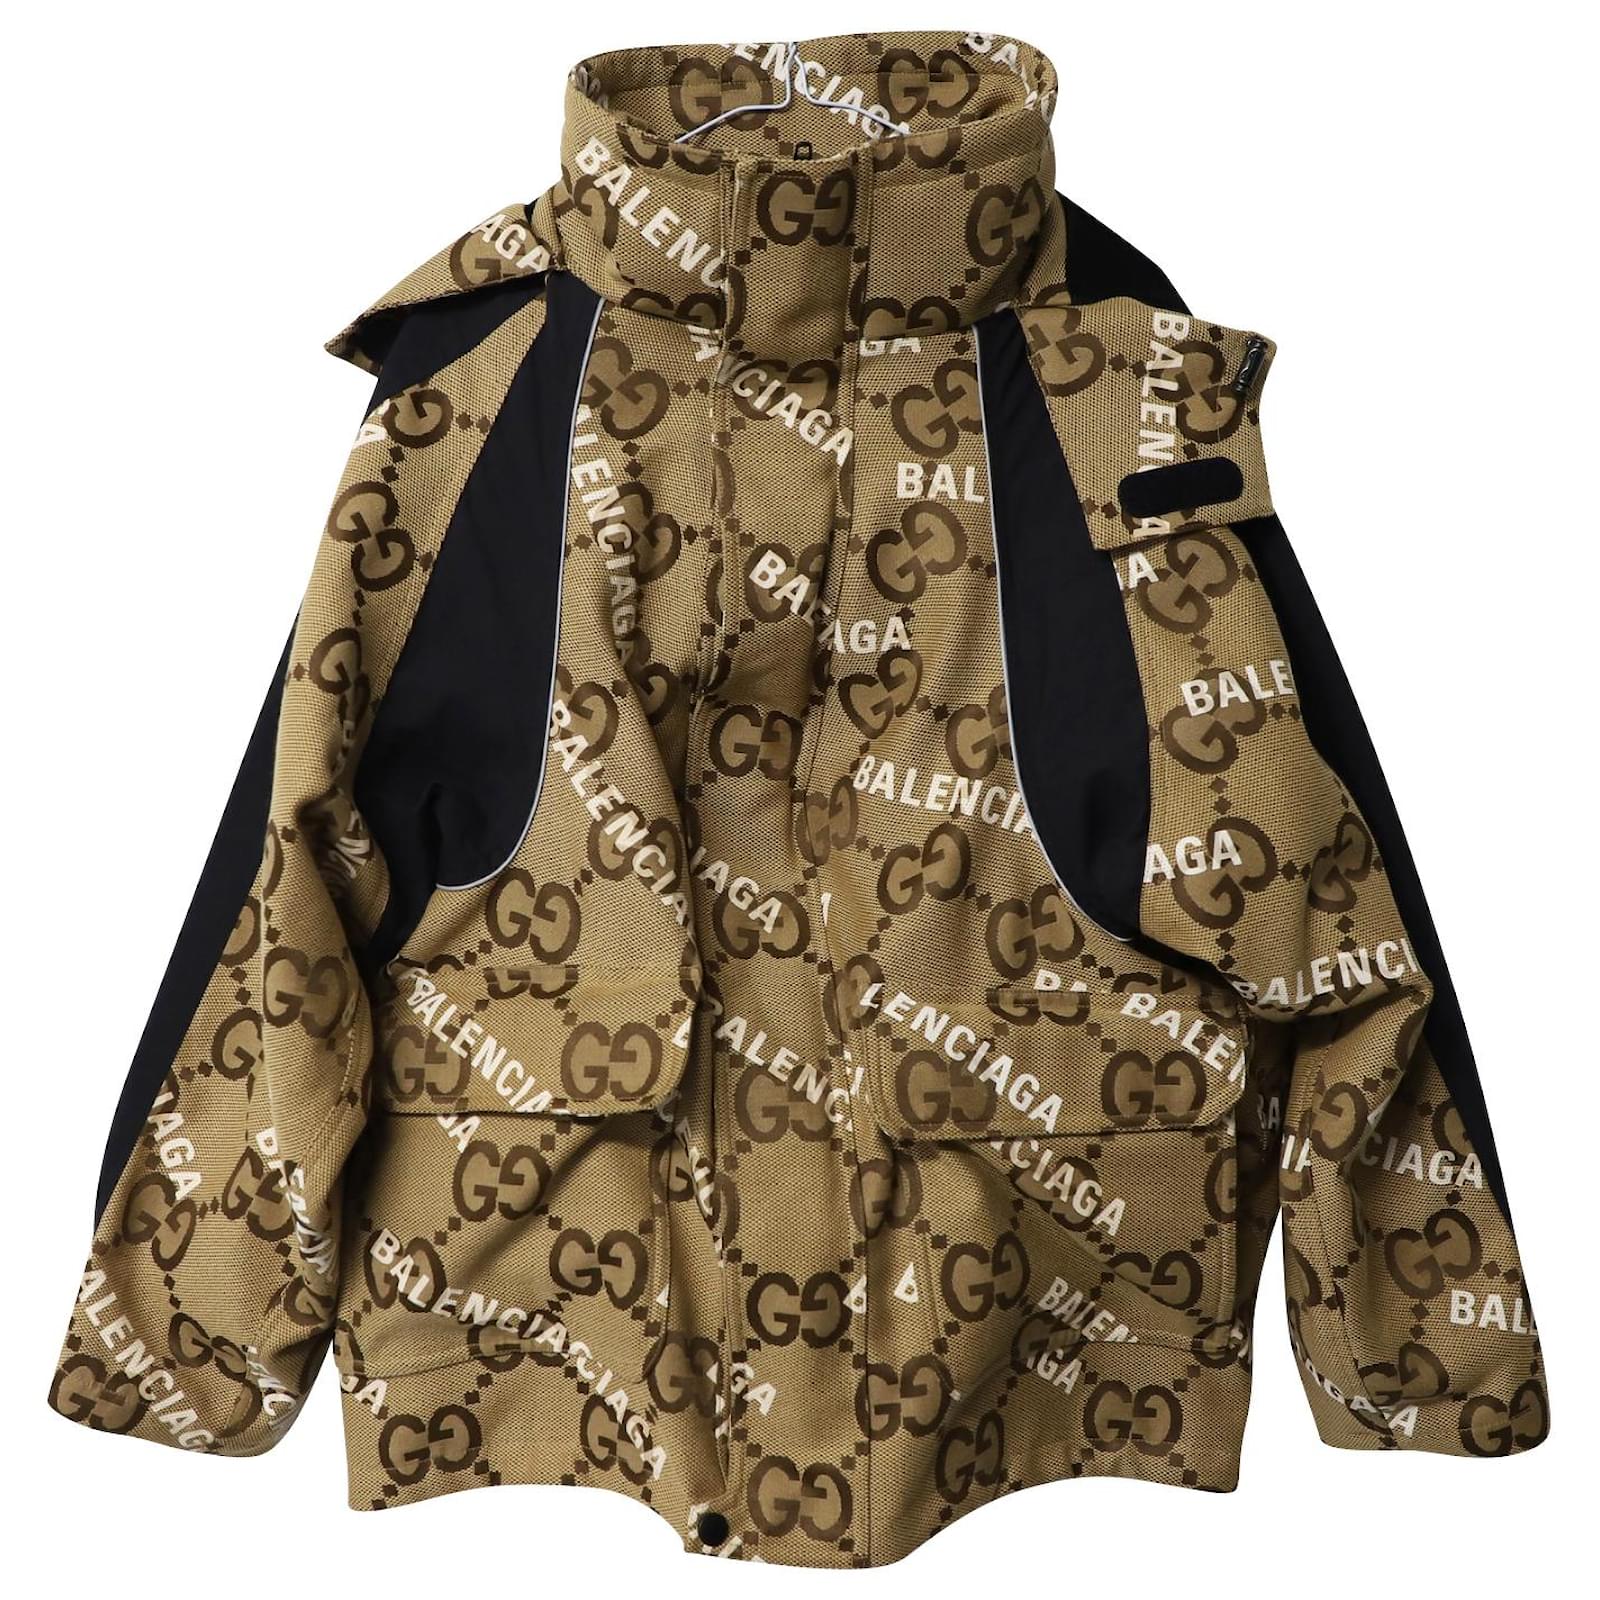 Limited Edition The Hacker Project Jumbo GG Jacket by Gucci x Balenciaga -  SLOANE ST. PERTH WA